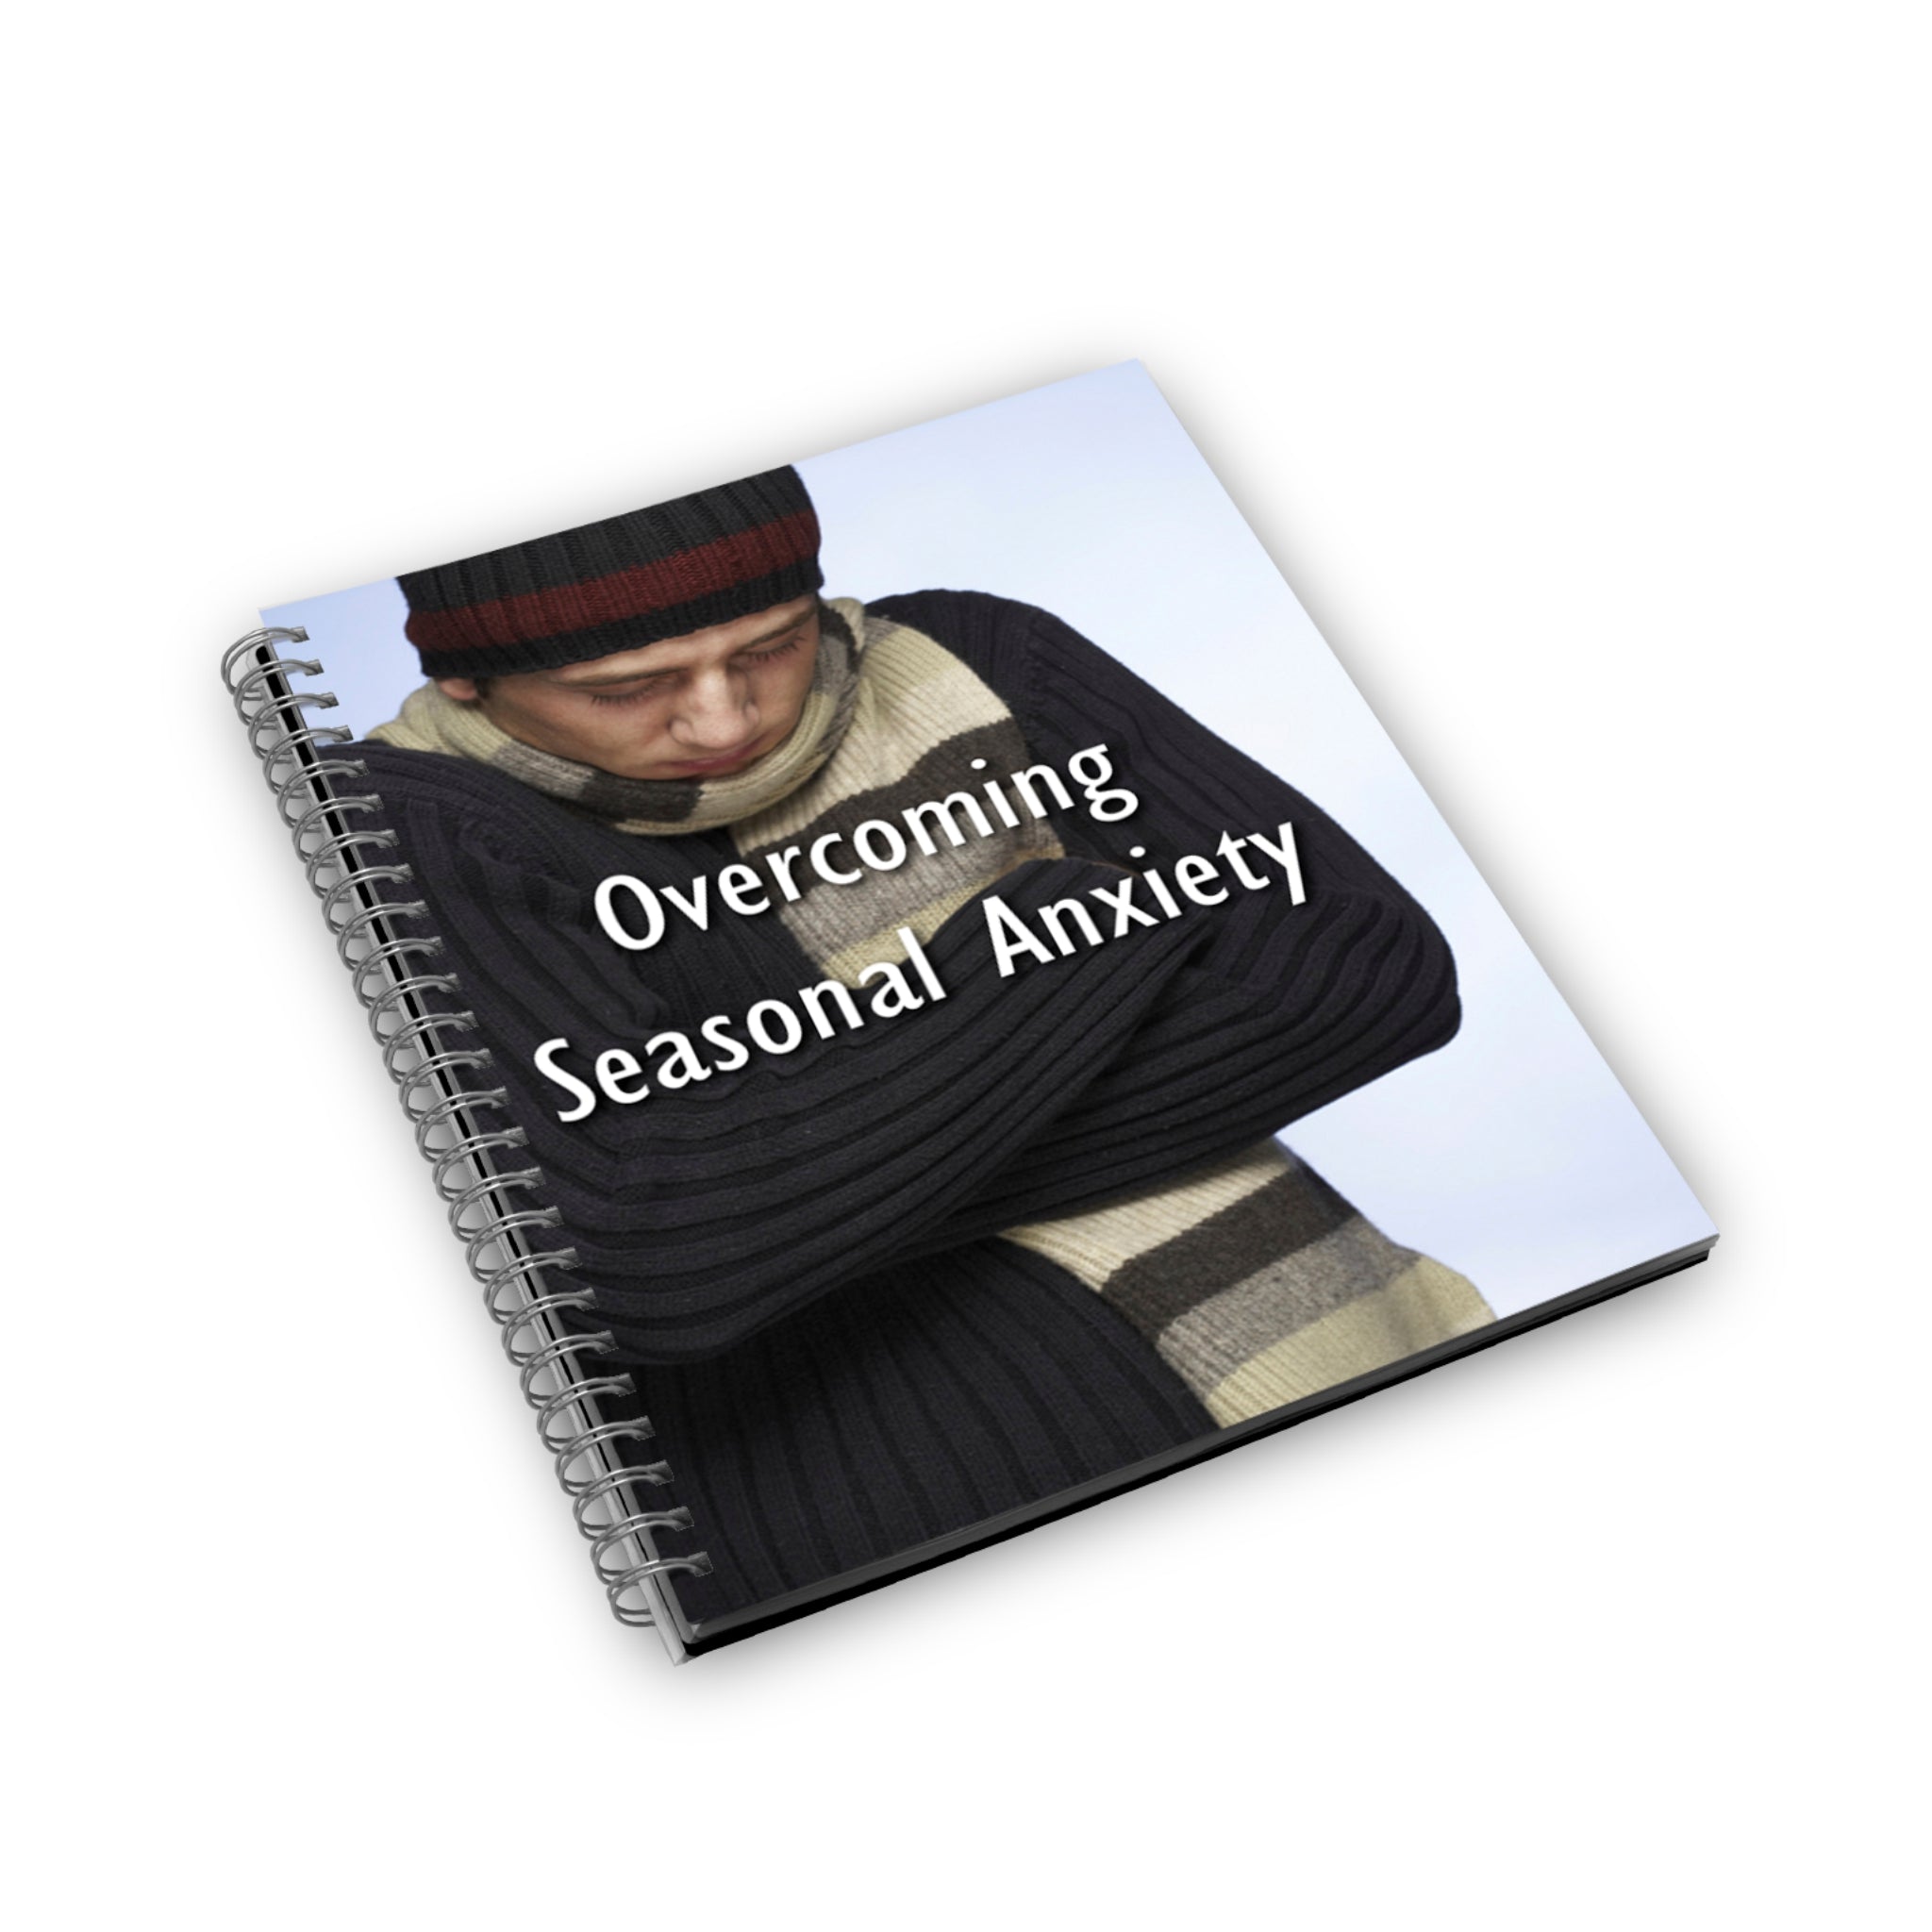 Overcoming Seasonal Anxiety Edition 2 Ebook